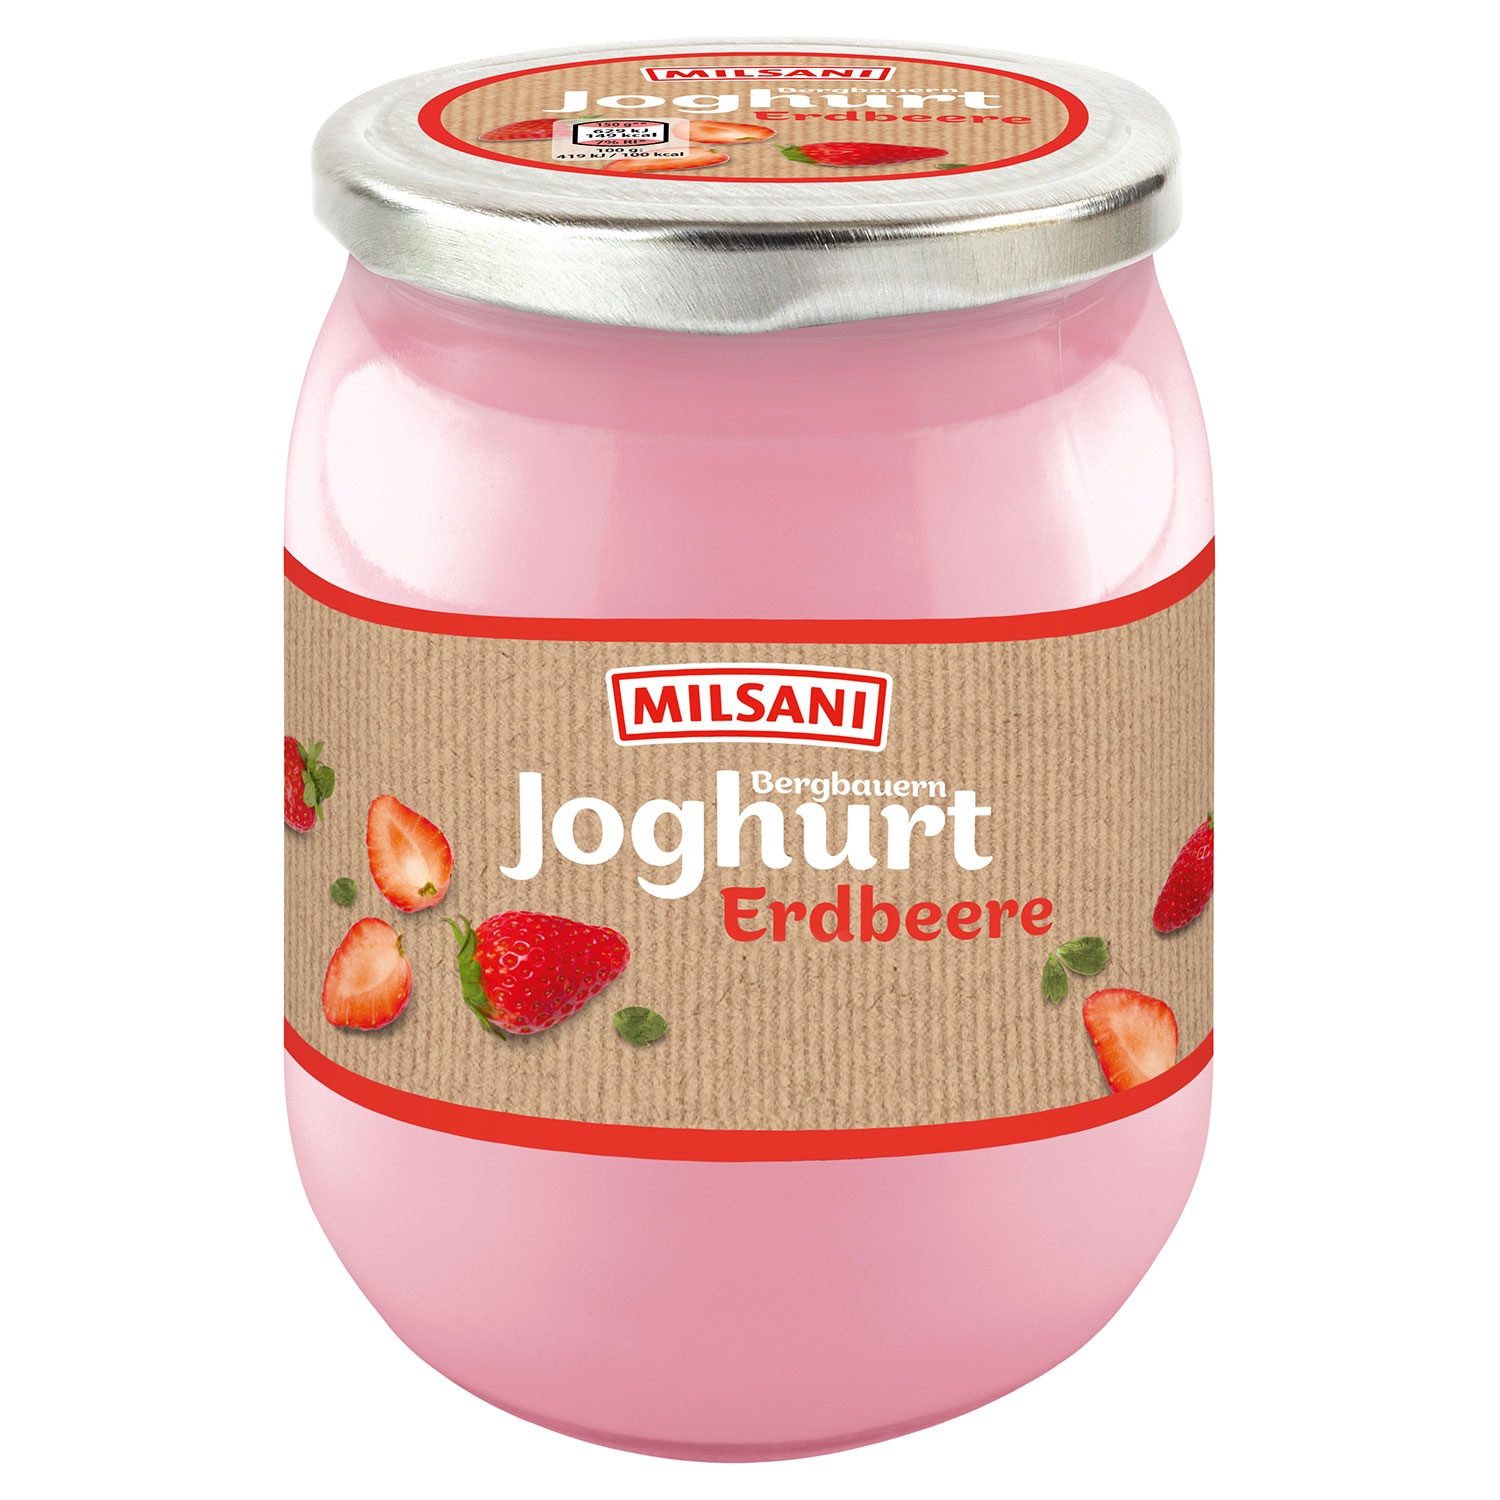 MILSANI Bergbauern-Joghurt 0,45 kg, Erdbeer